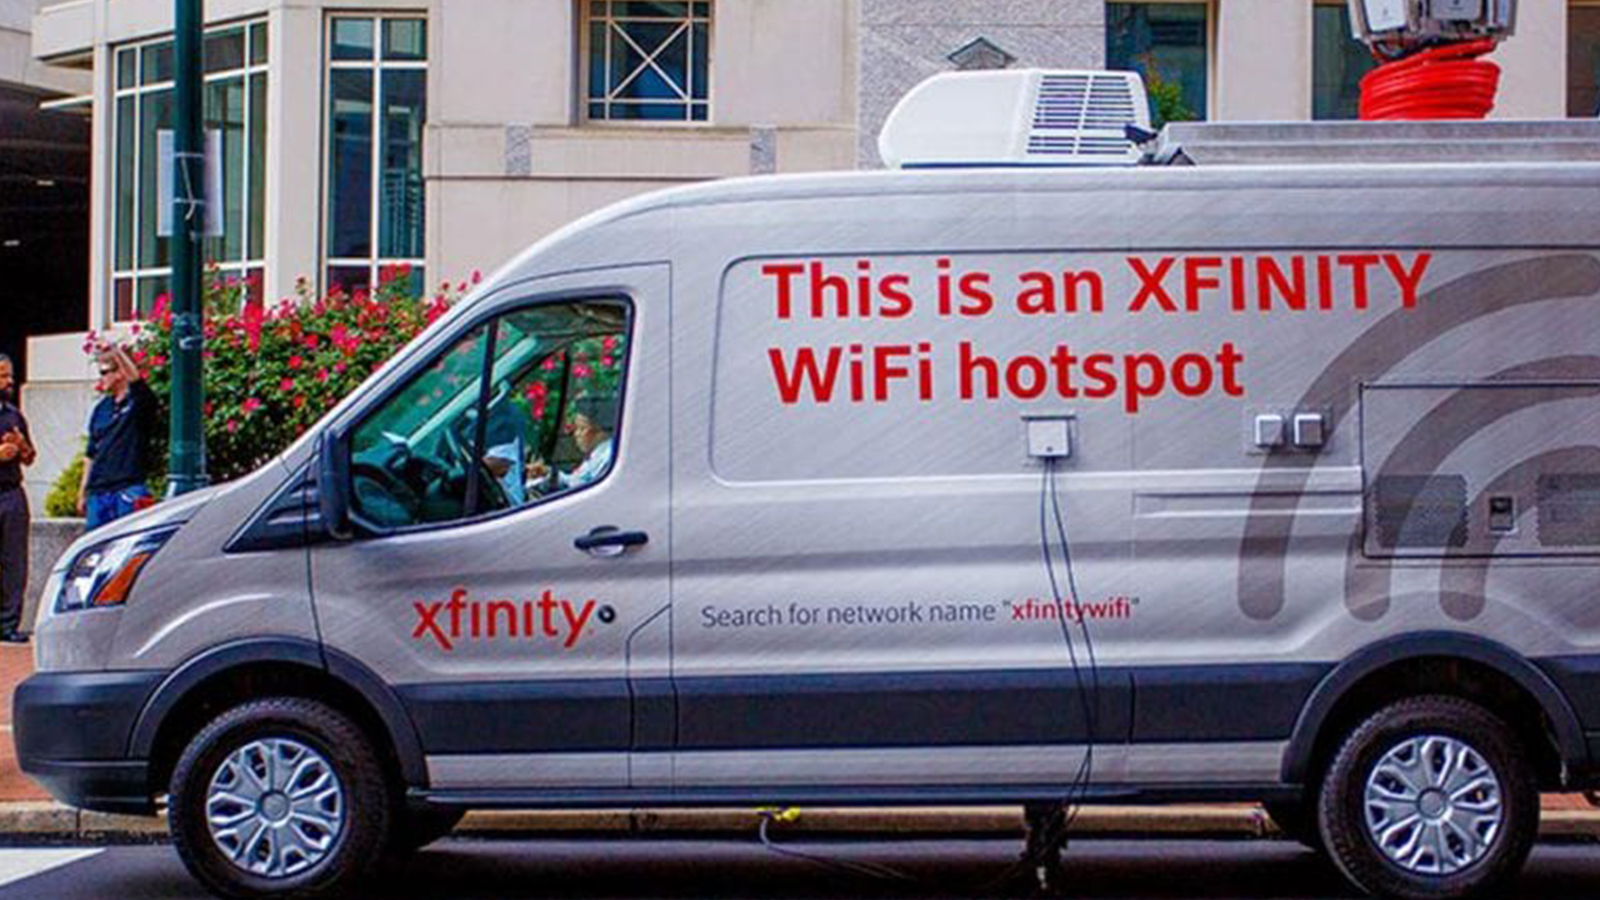 An Xfinity mobile wifi hotspot van